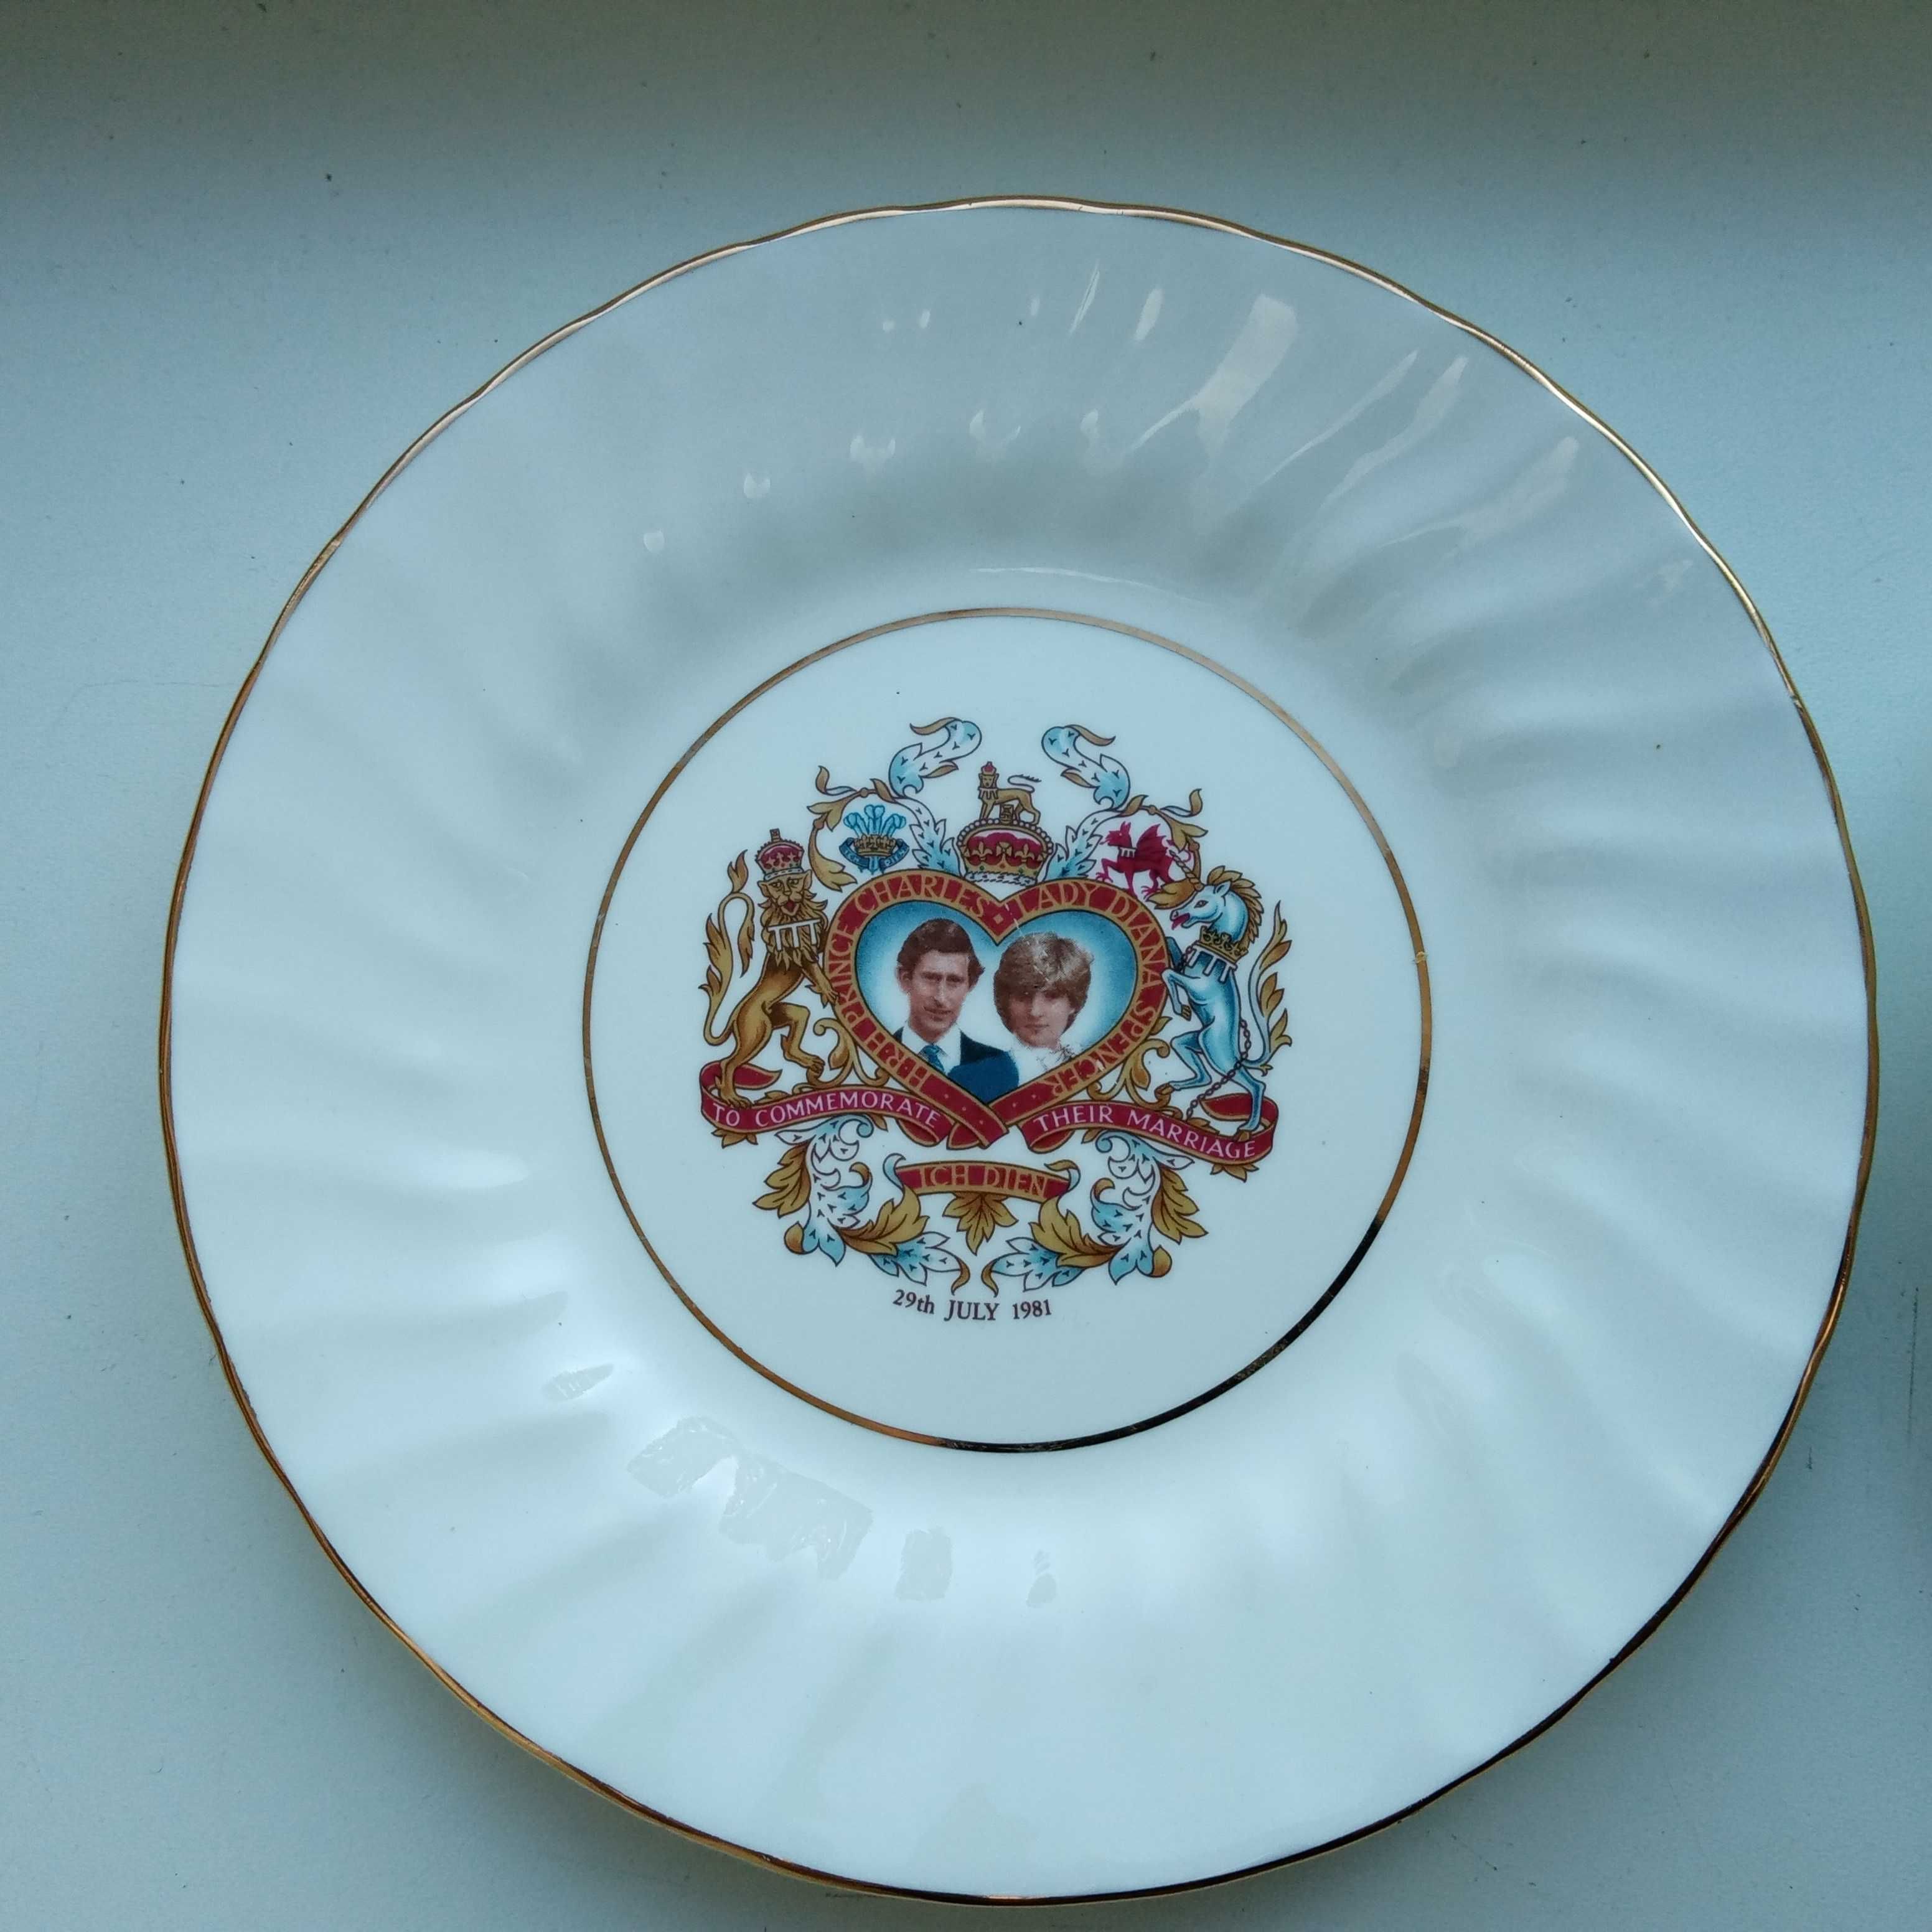 Фарфоровые тарелочки и чашка Принц Чарльз и принцесса Диана б/у